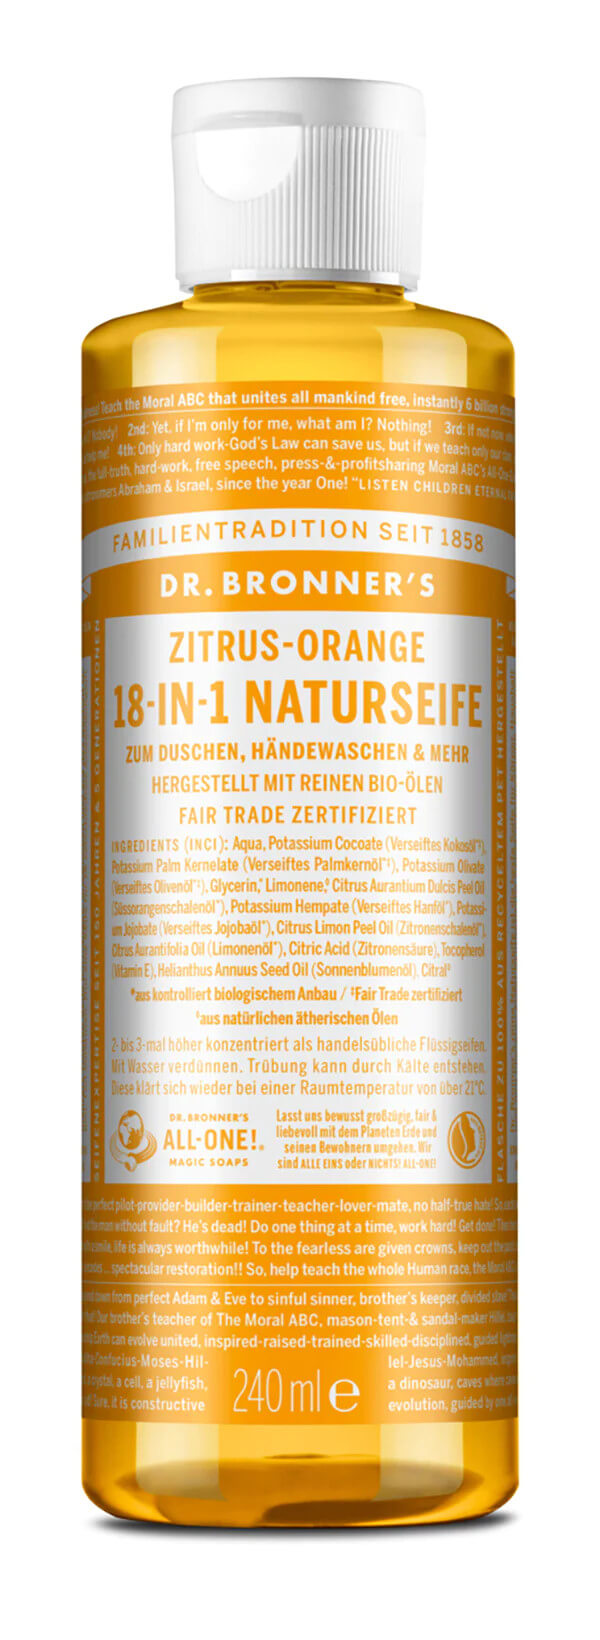 Dr. Bronner´s 18-IN-1 Naturseife 240 ml Zitrus-Orange